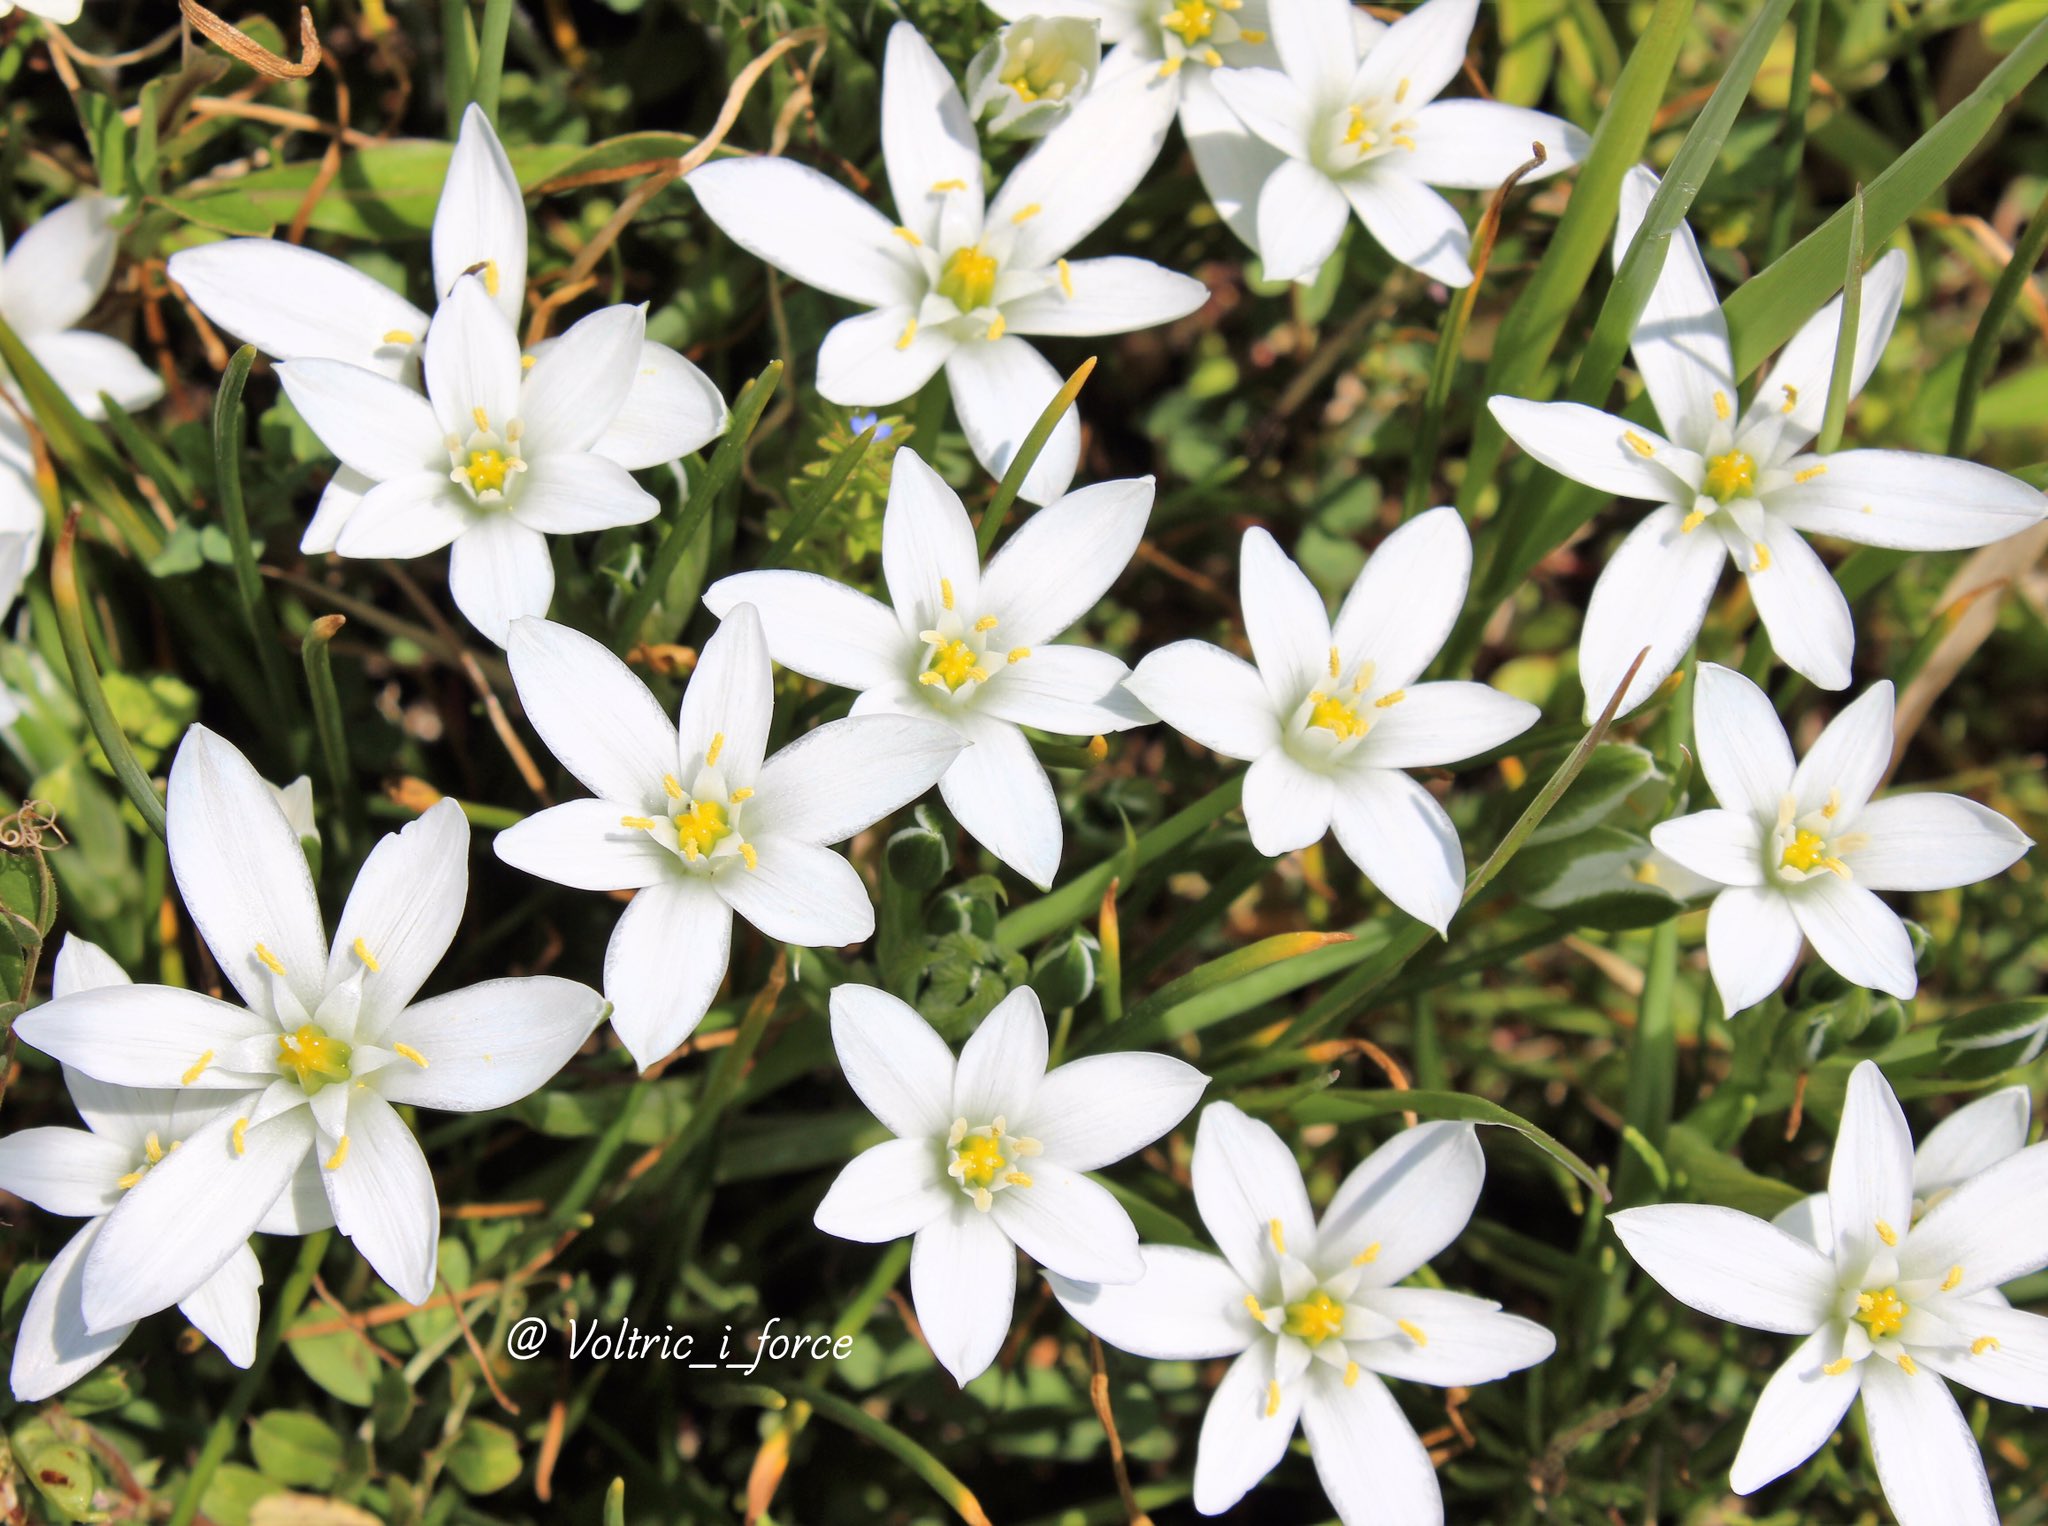 Vtifカスタマイズ En Twitter オーニソガラムには色々な種類がありますが こちらはオーニソガラム ウンベラタム 白い星のような花は ハナニラと共に Star Of Bethlehem ベツレヘムの星 とも呼ばれるそうです 5月3日 誕生花の一つ オーニソガラム 和名 大甘